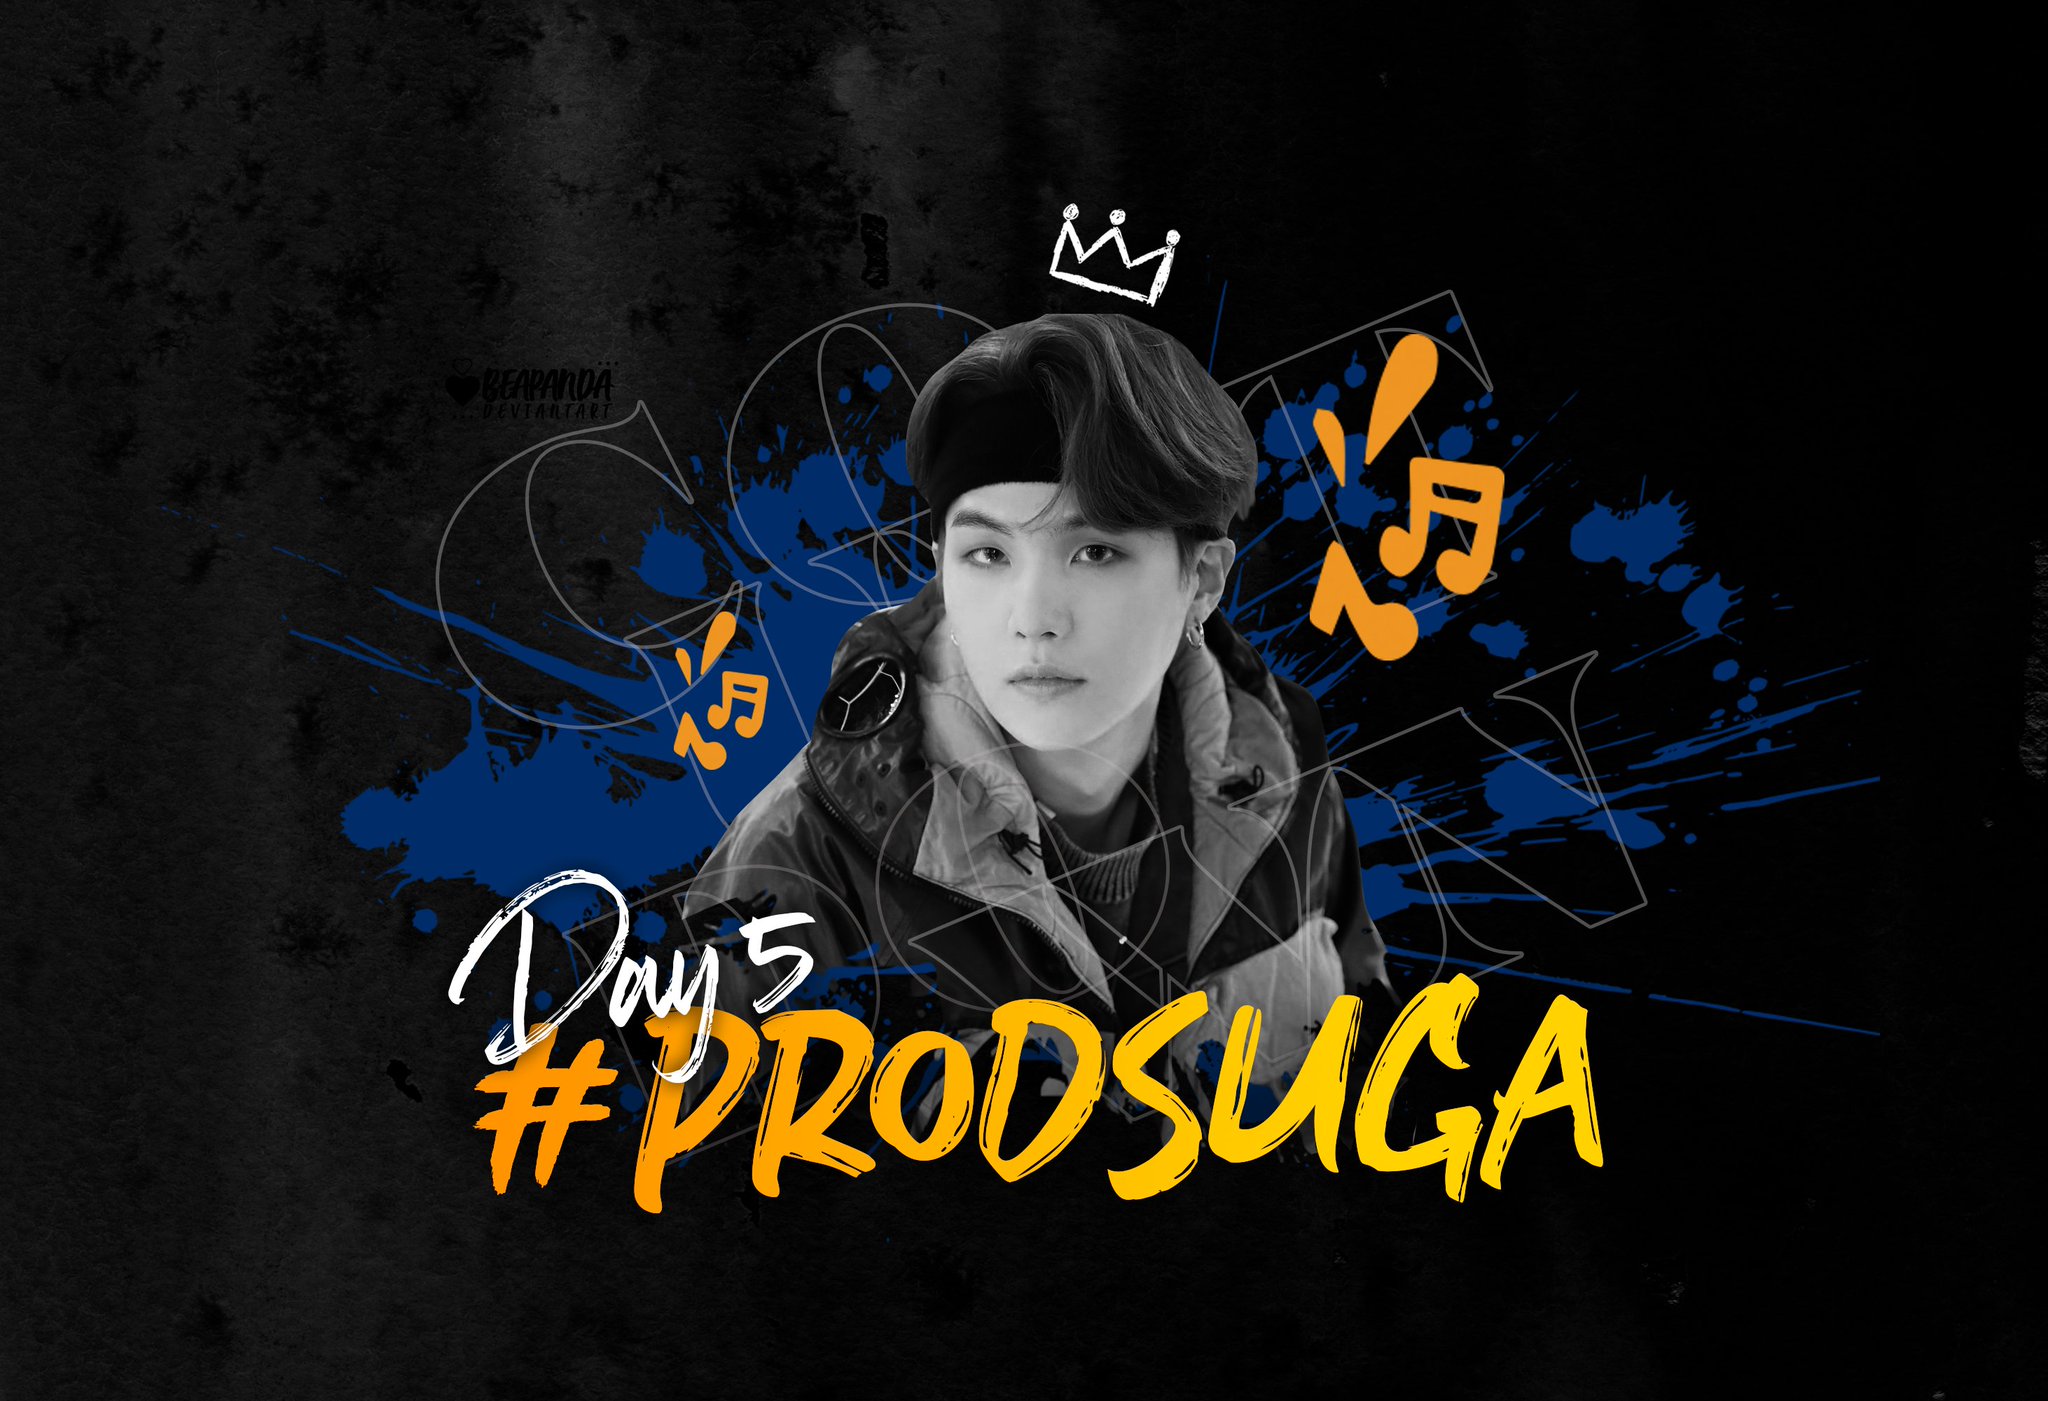 Producer SUGA (hashtag to celebrate SUGA's producer work)